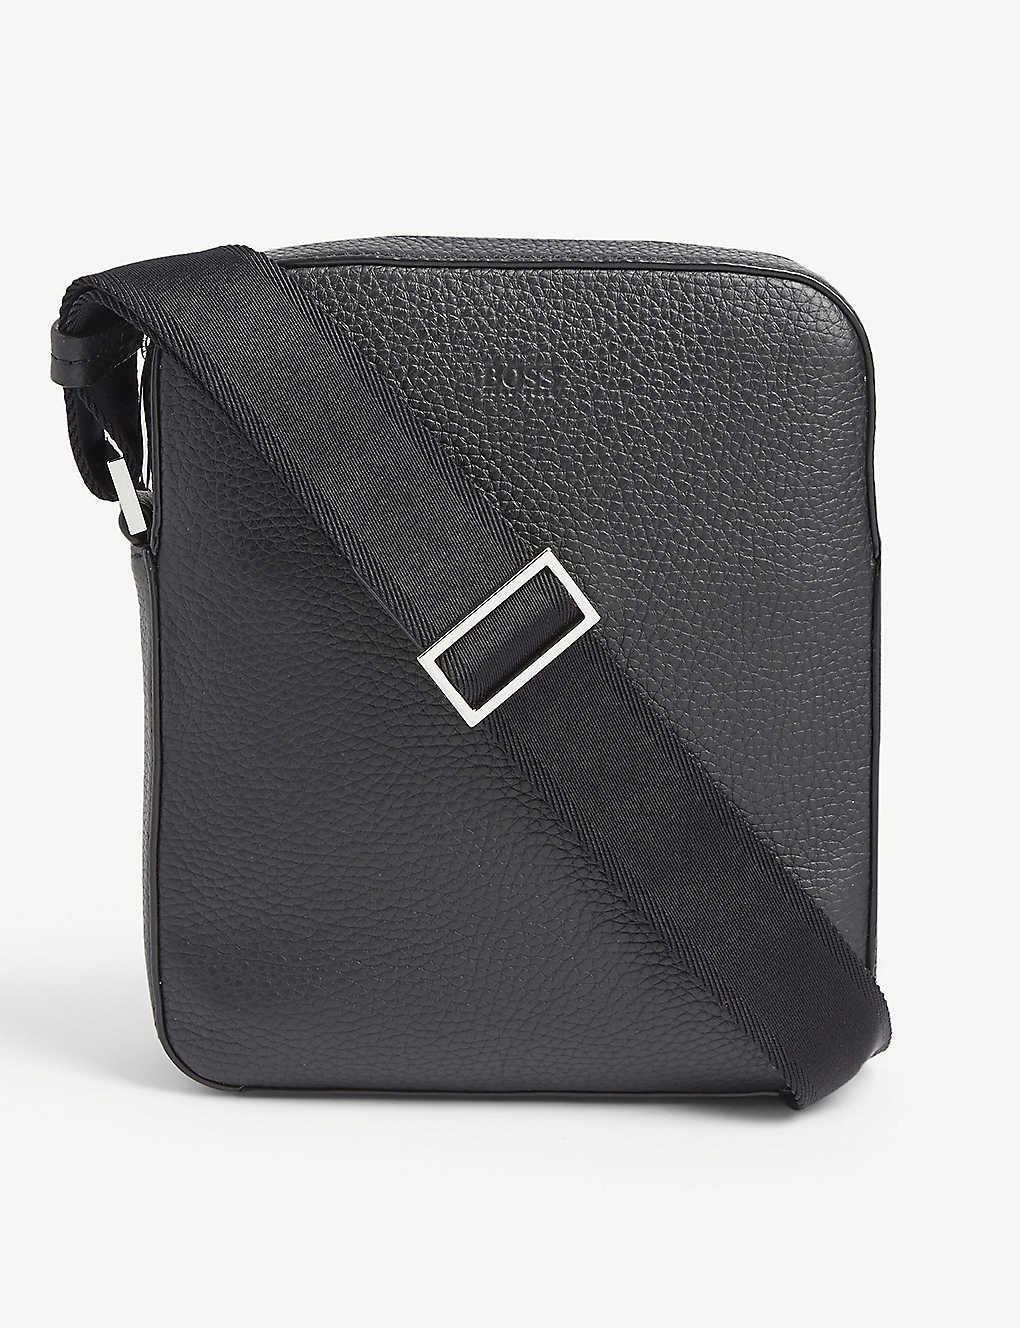 BOSS by HUGO BOSS Crosstown Leather Cross-body Bag in Black for Men | Lyst